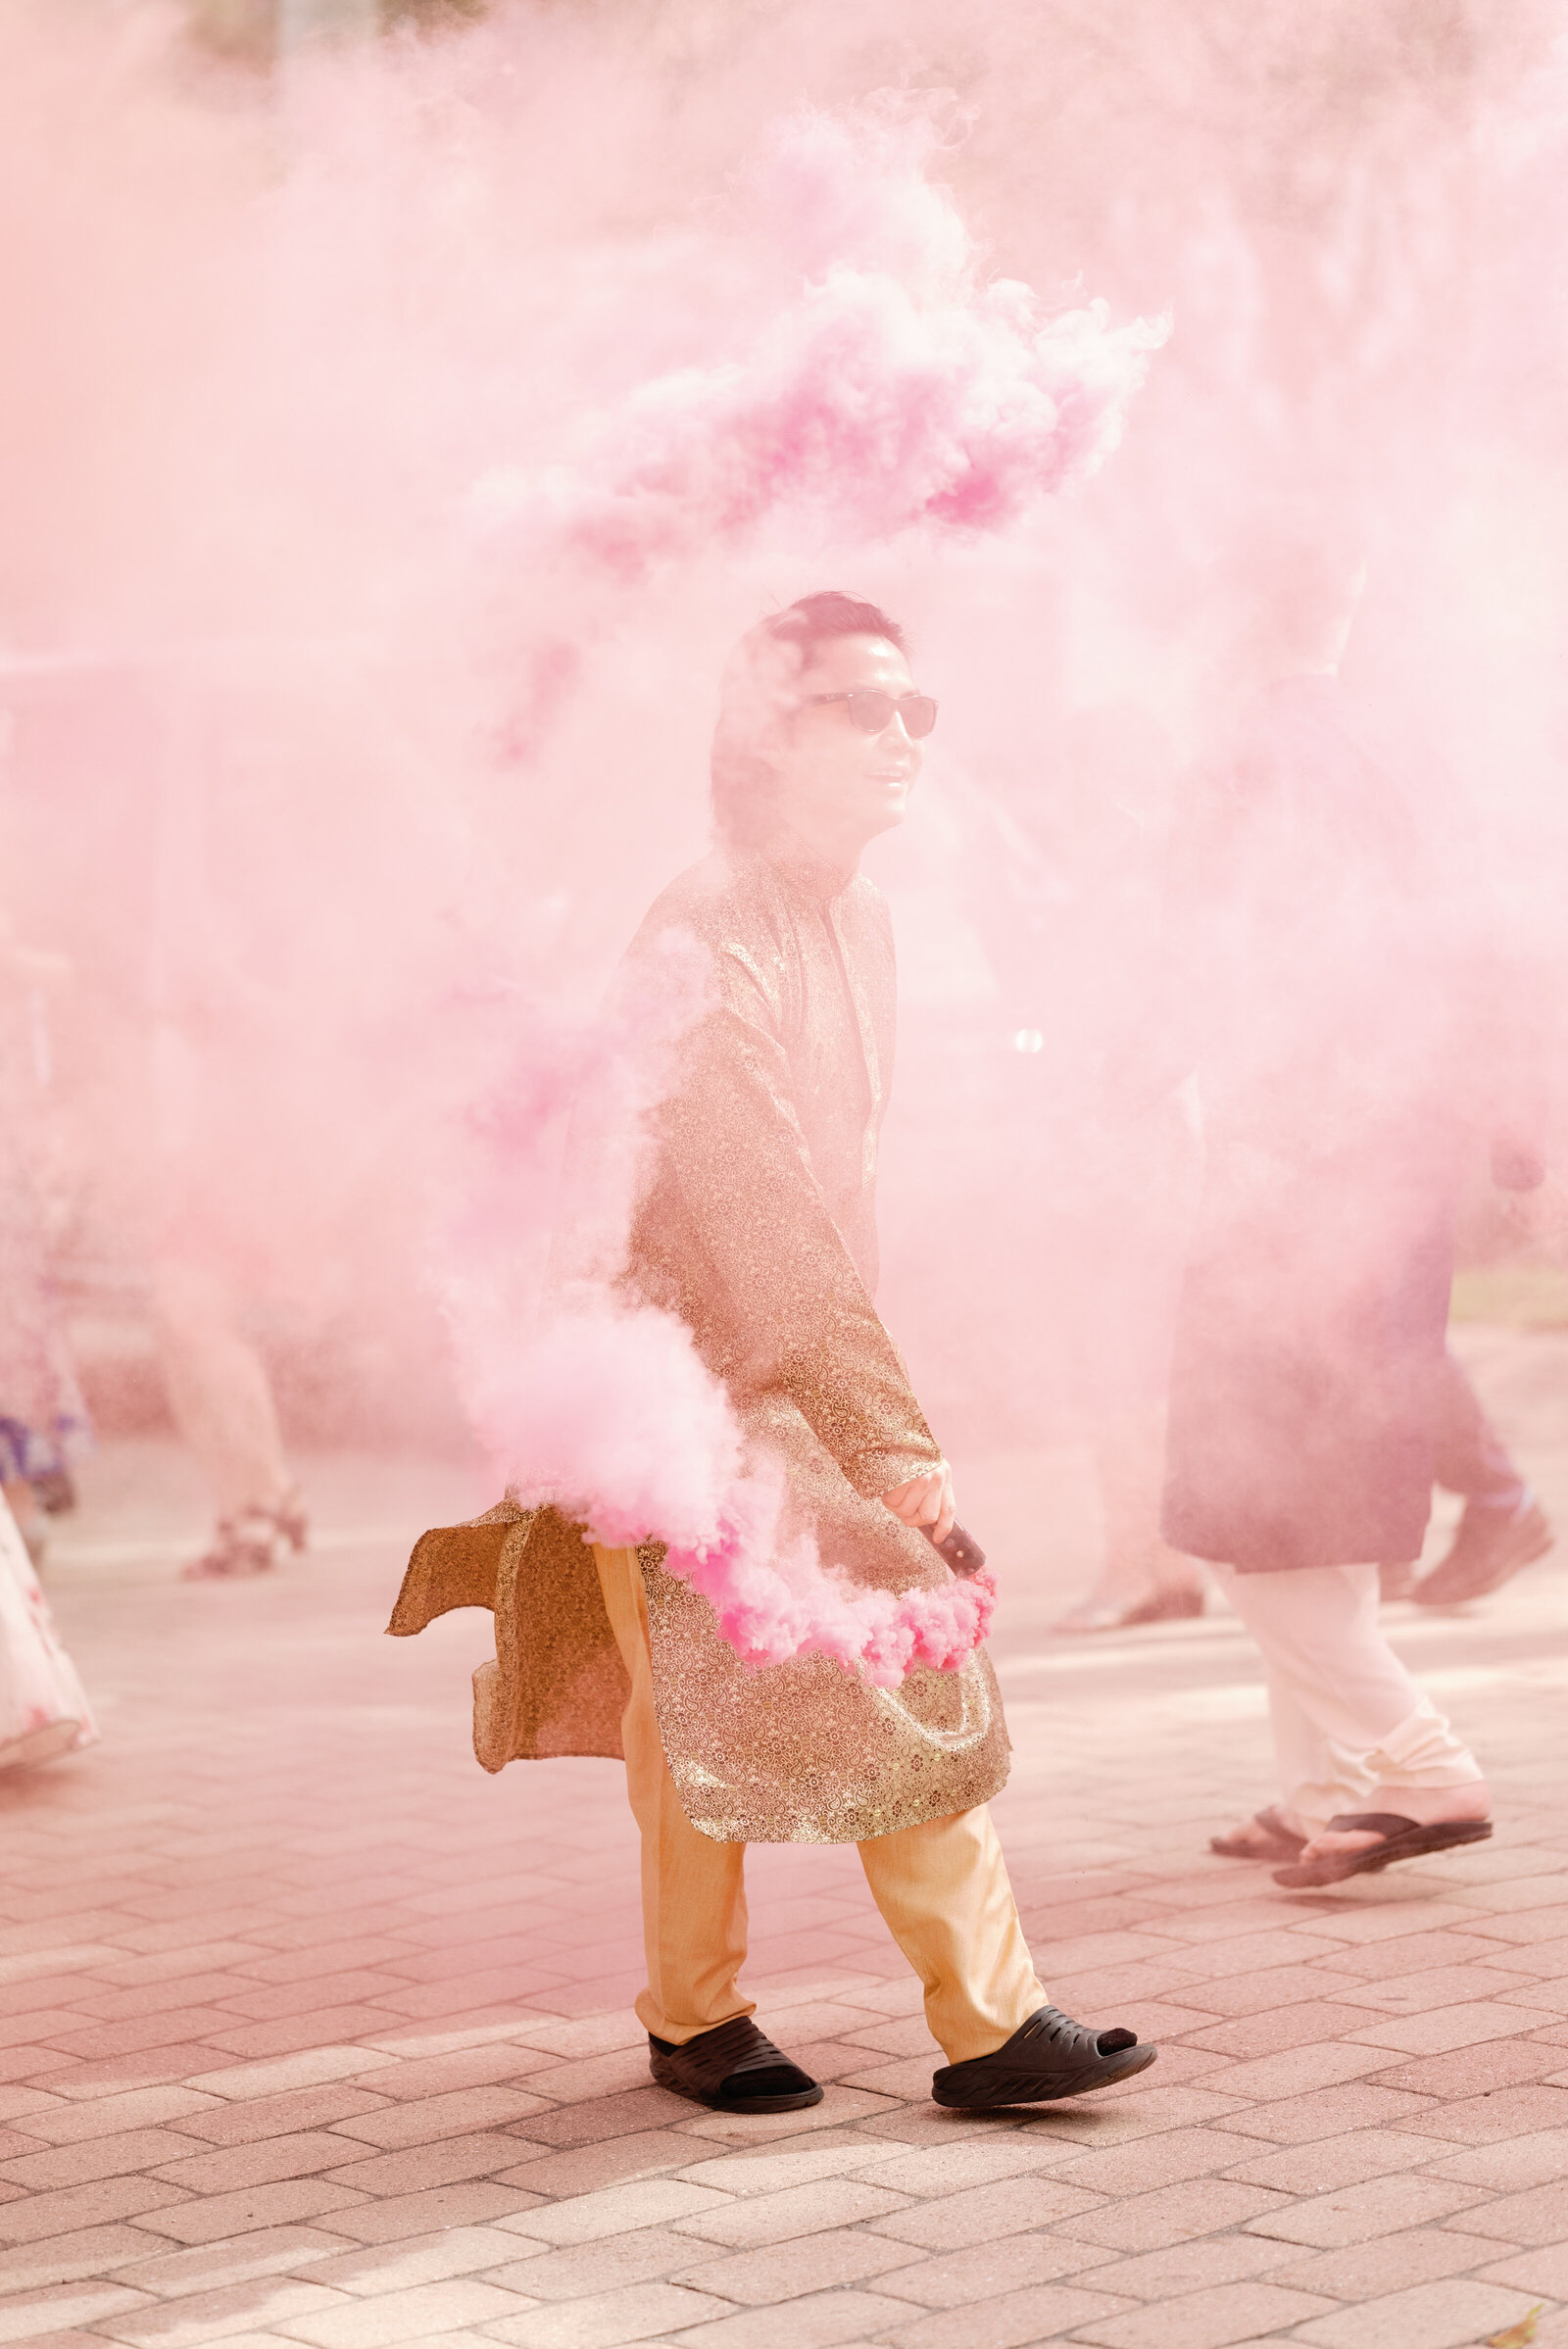 Groomsman  engulfed in pink smoke bomb during the wedding day baraat